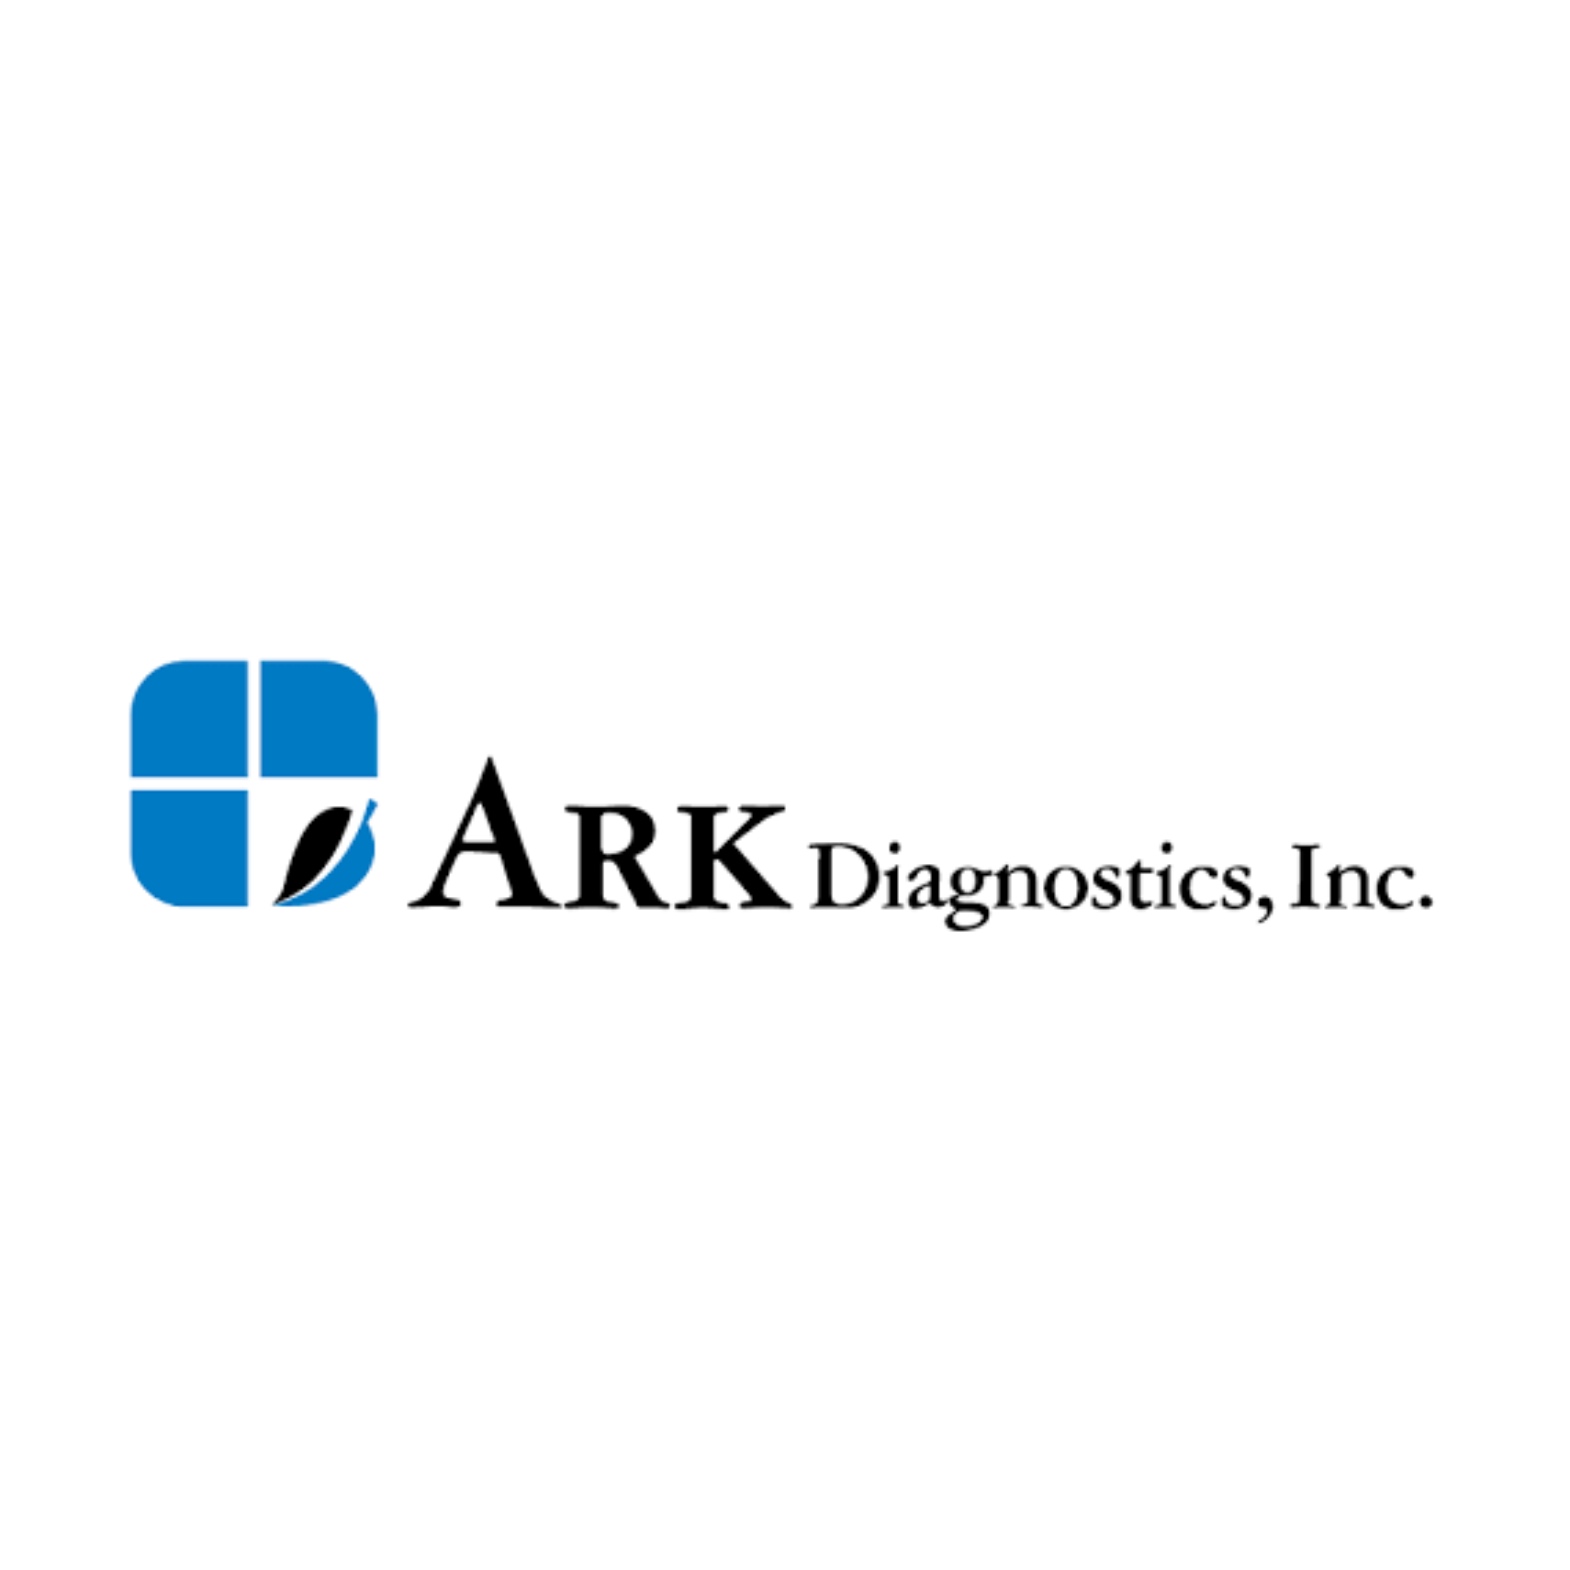 images/AFMS/Partners/ARK_Diagnostics.jpg#joomlaImage://local-images/AFMS/Partners/ARK_Diagnostics.jpg?width=1570&height=1570